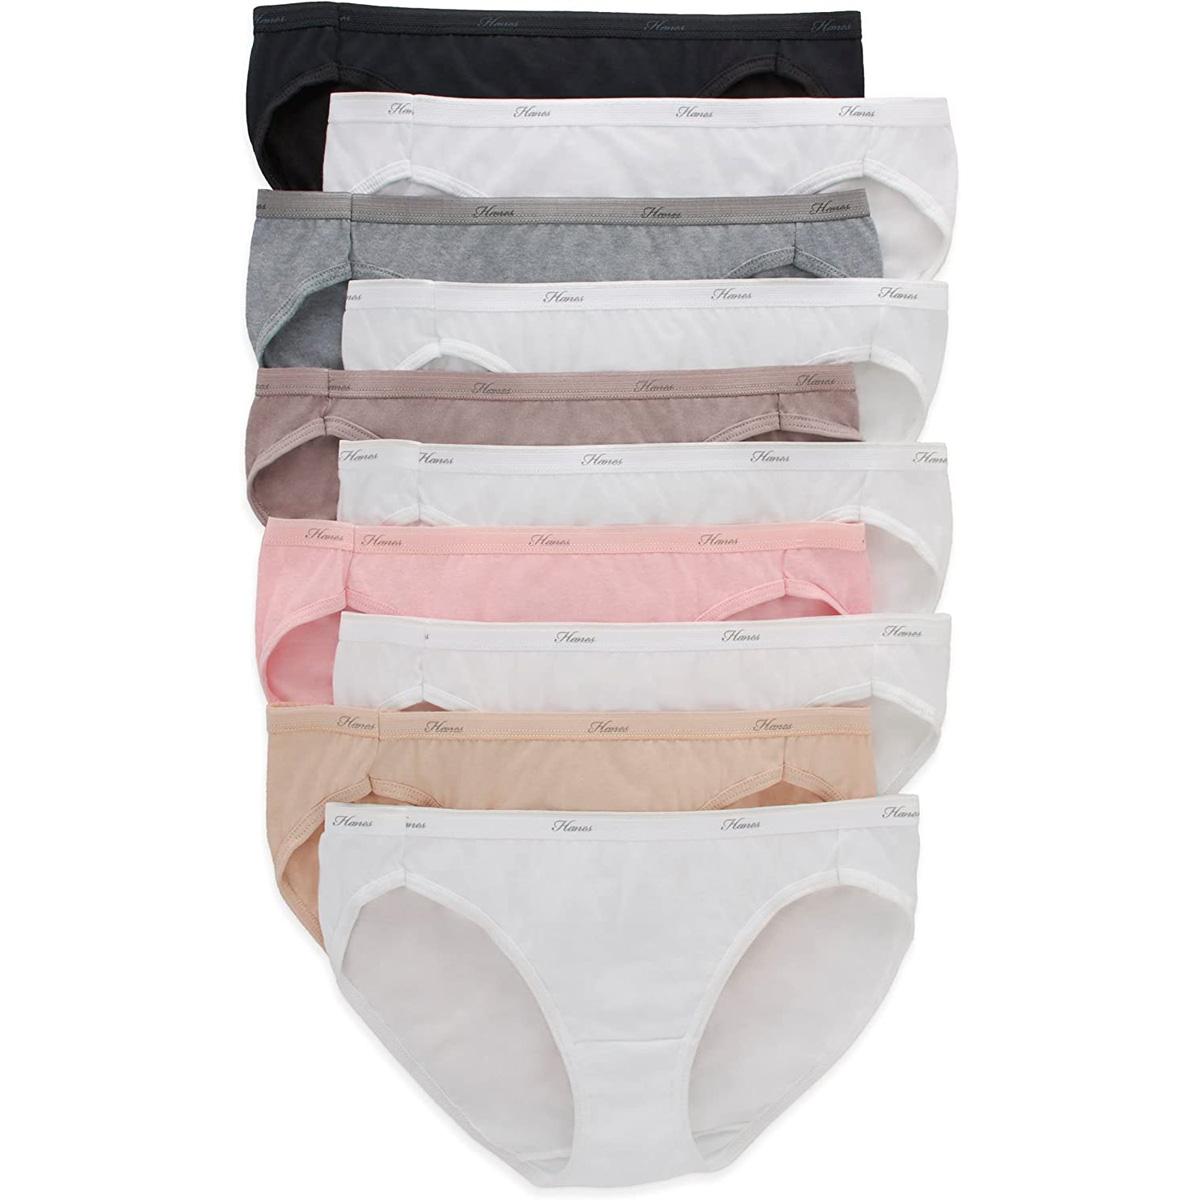 Hanes Womens Cotton Bikini Underwear 10 Pack for $10.14 Shipped